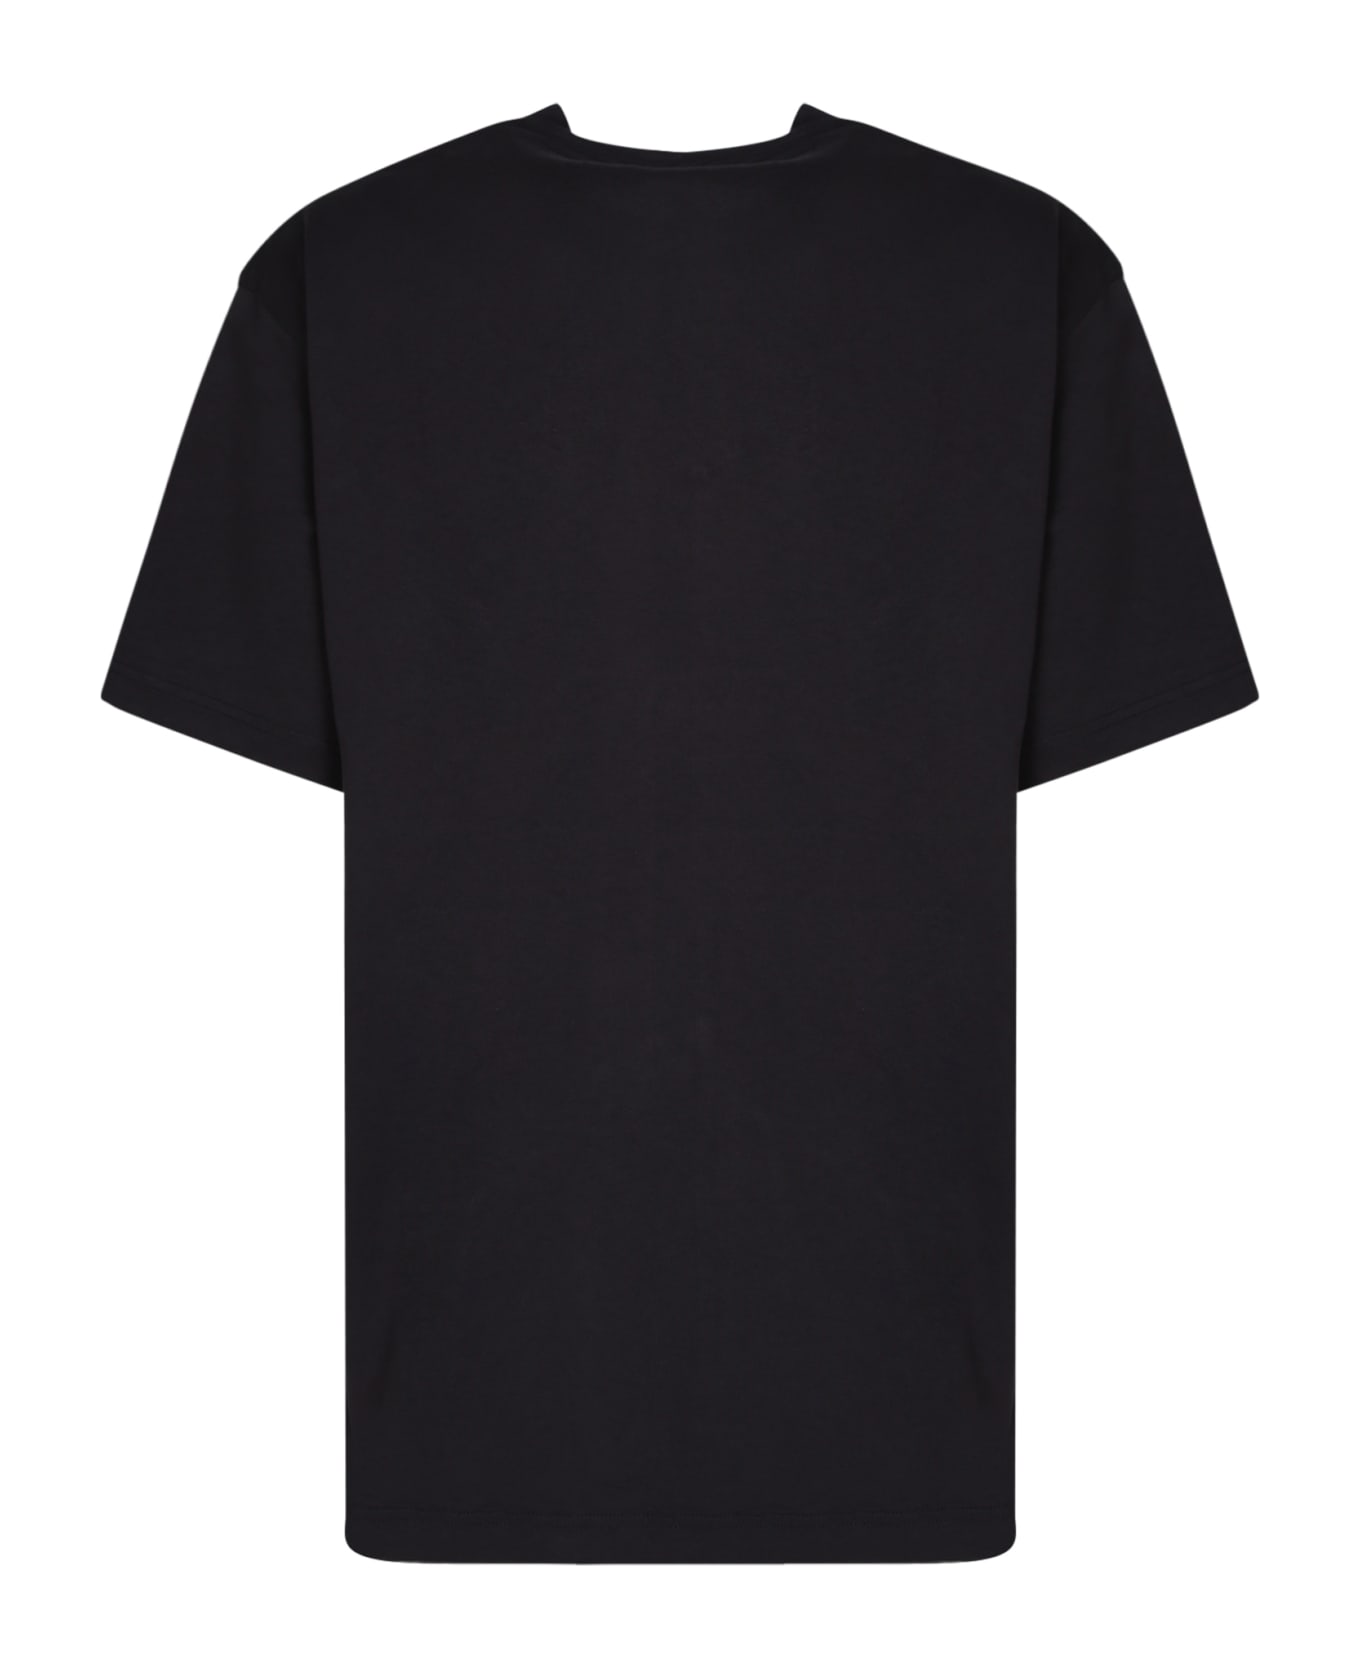 Fuct Money Crossed Black T-shirt - Black